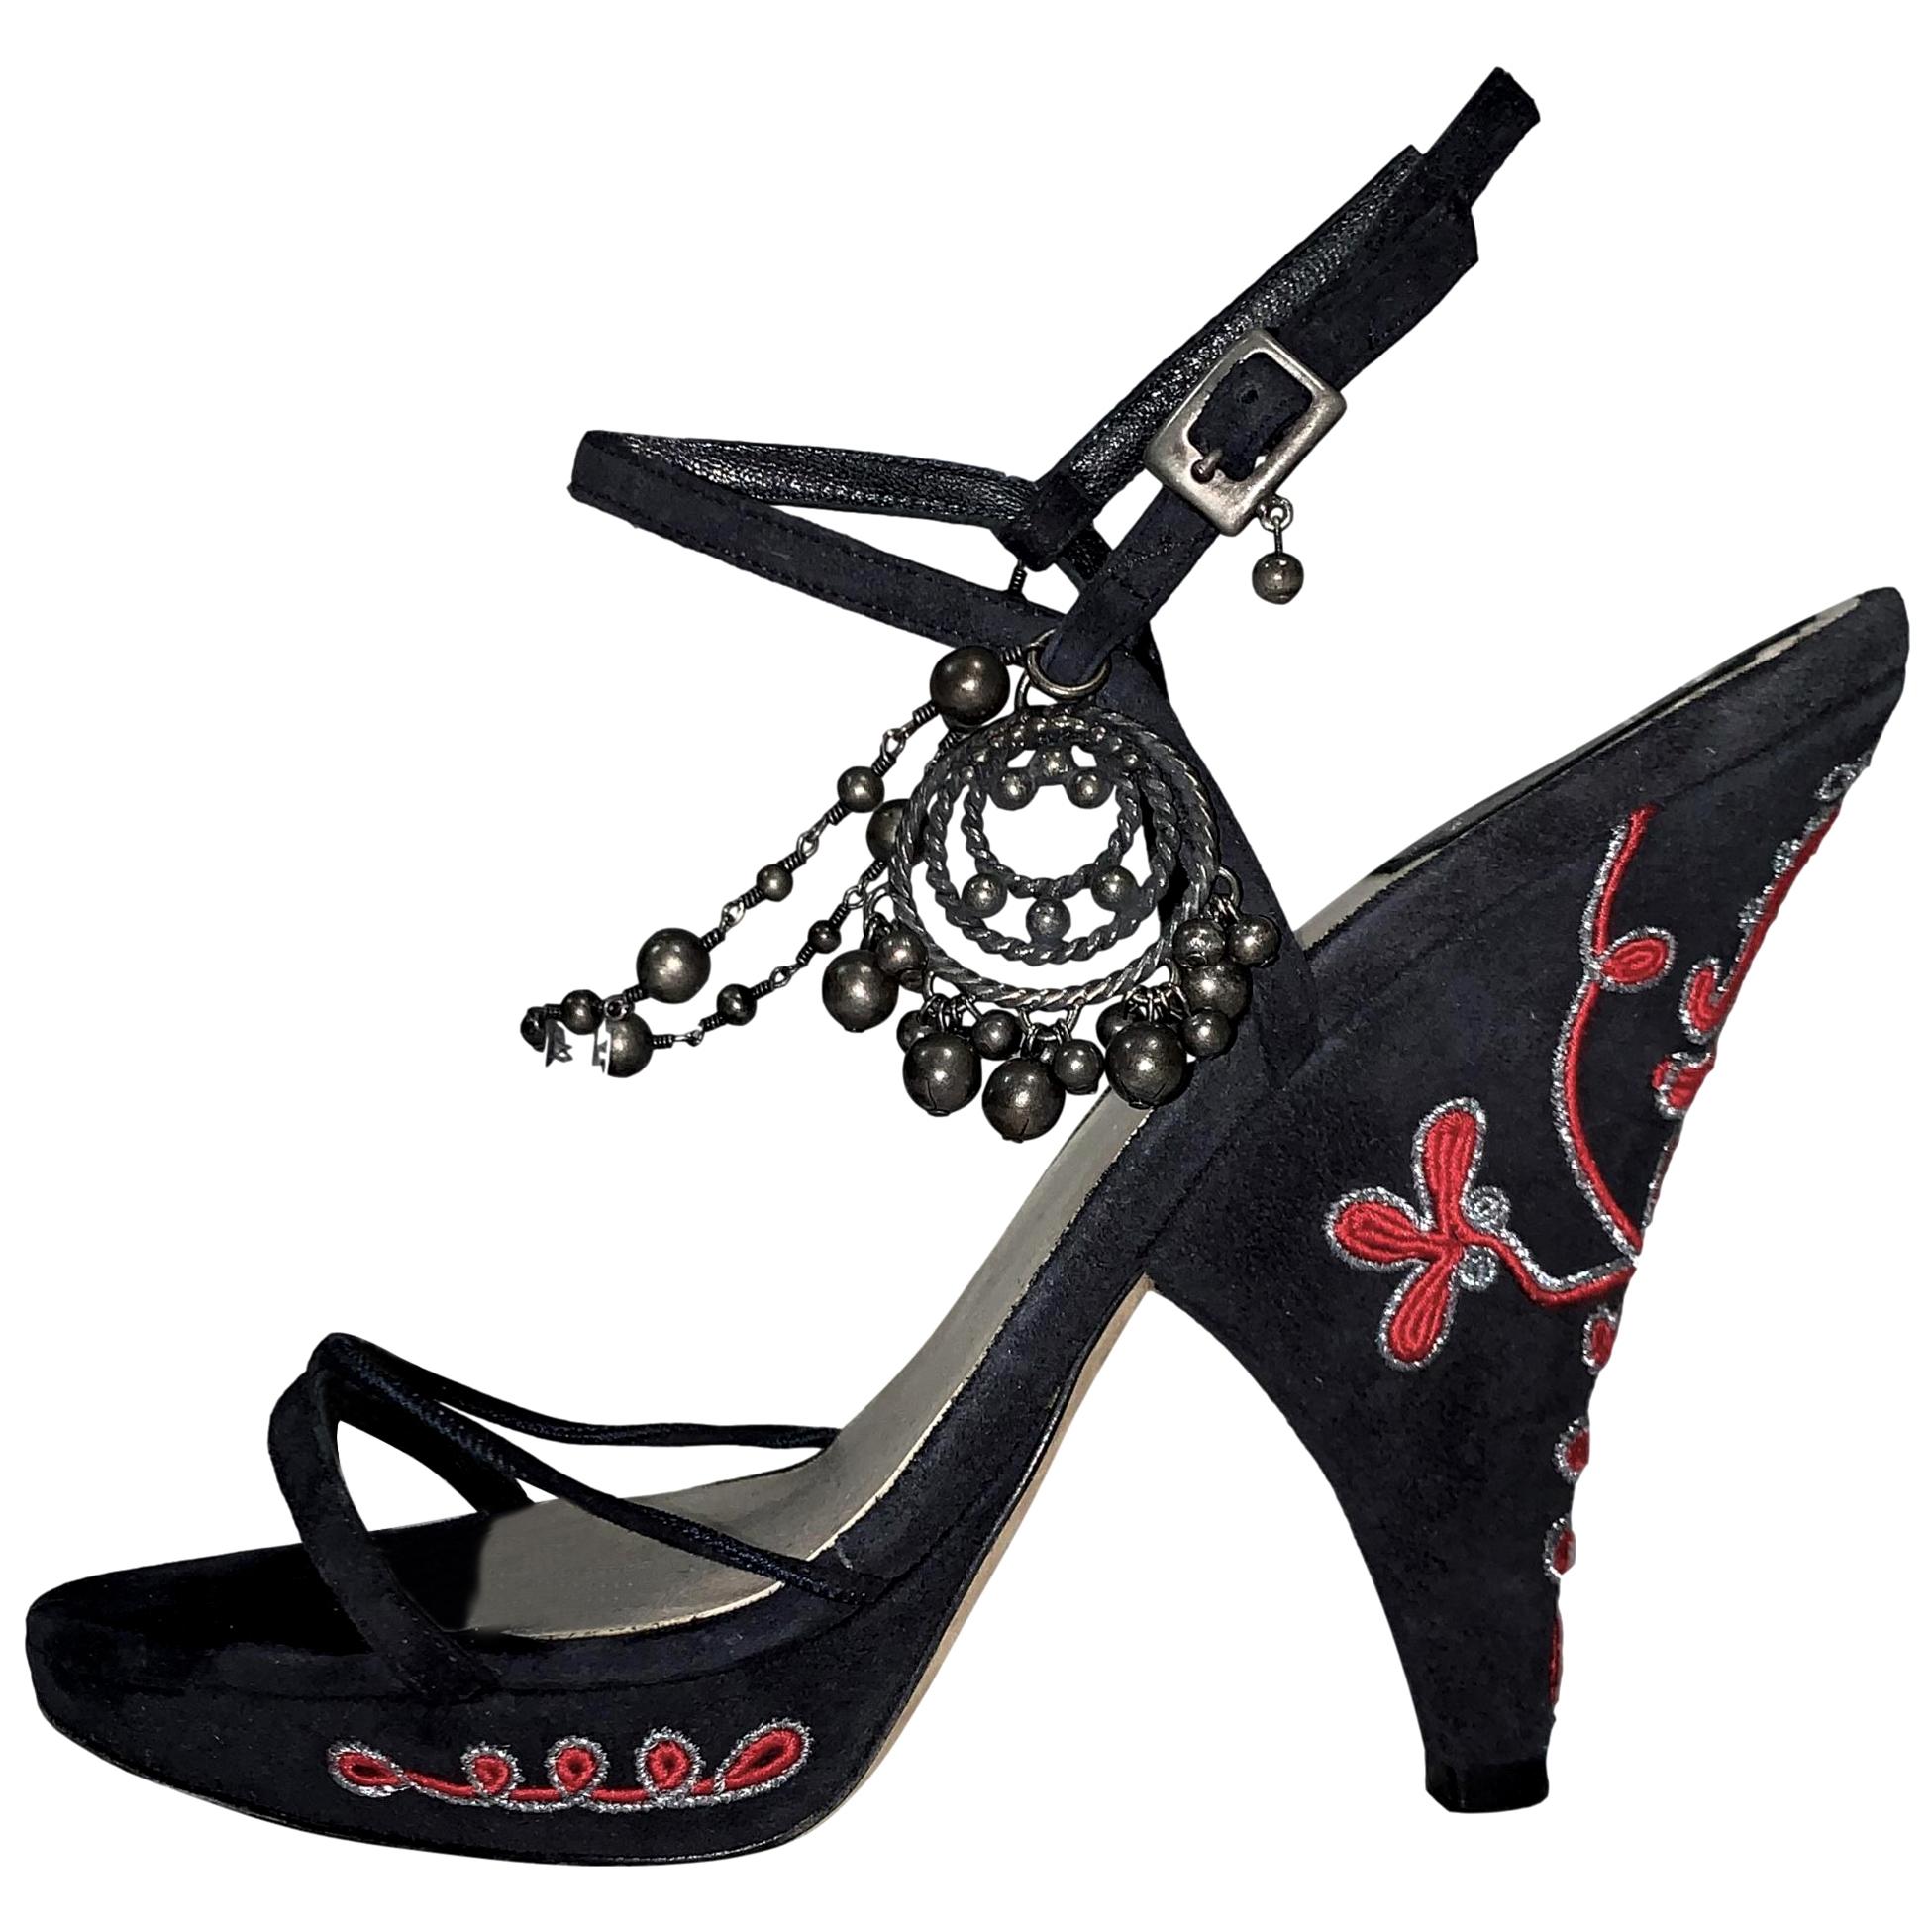 S/S 1999 Christian Dior John Galliano Black & Red Embellished Heels 38